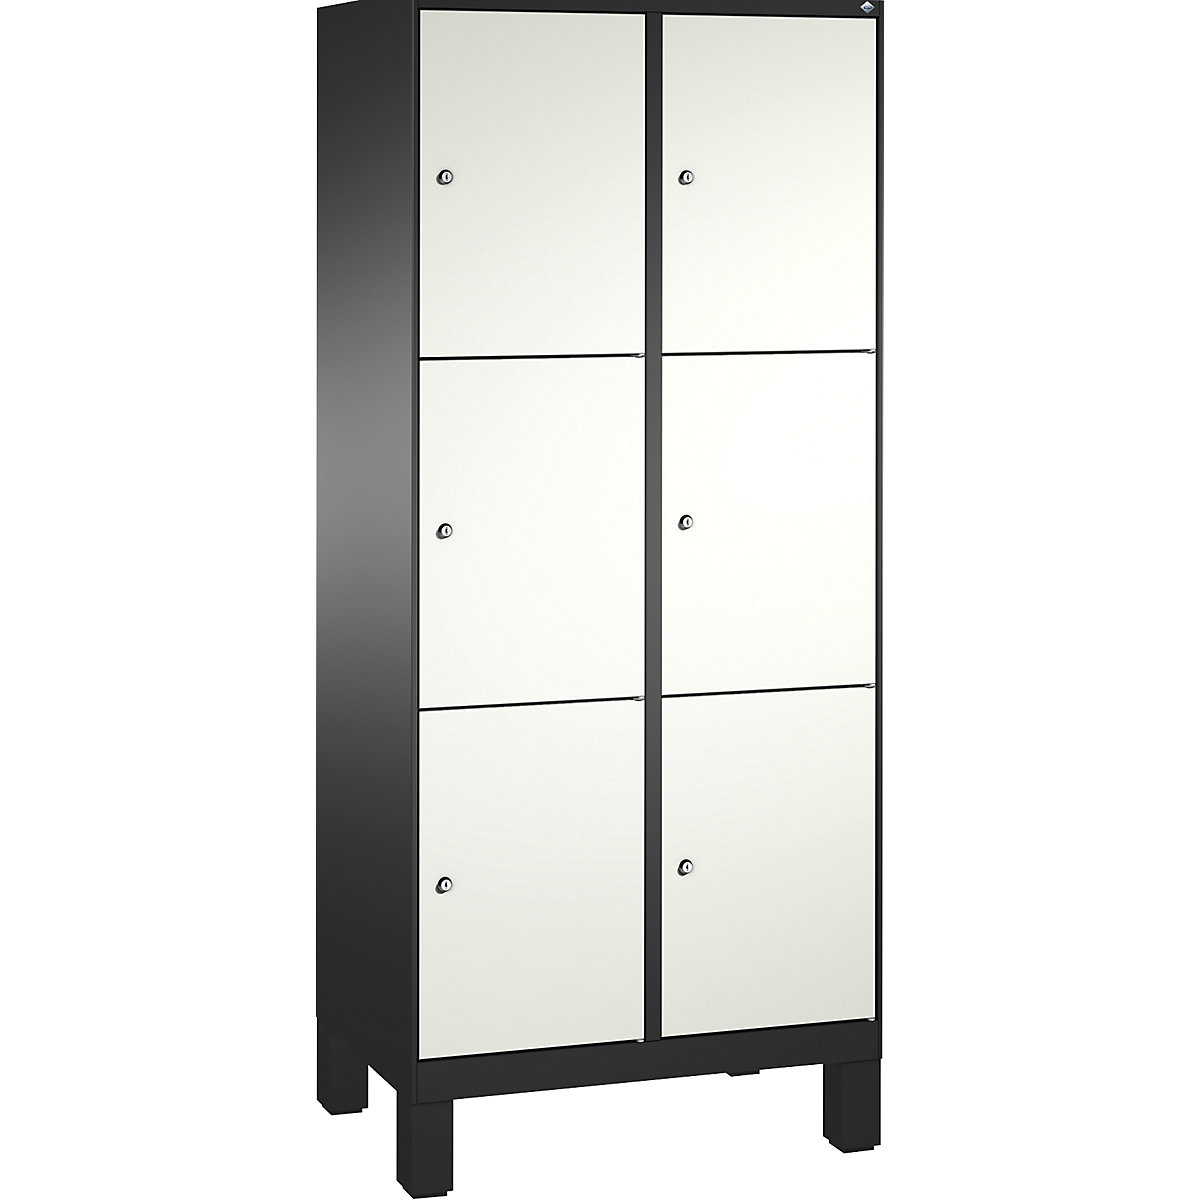 EVOLO locker unit, with feet – C+P, 2 compartments, 3 shelf compartments each, compartment width 400 mm, black grey / traffic white